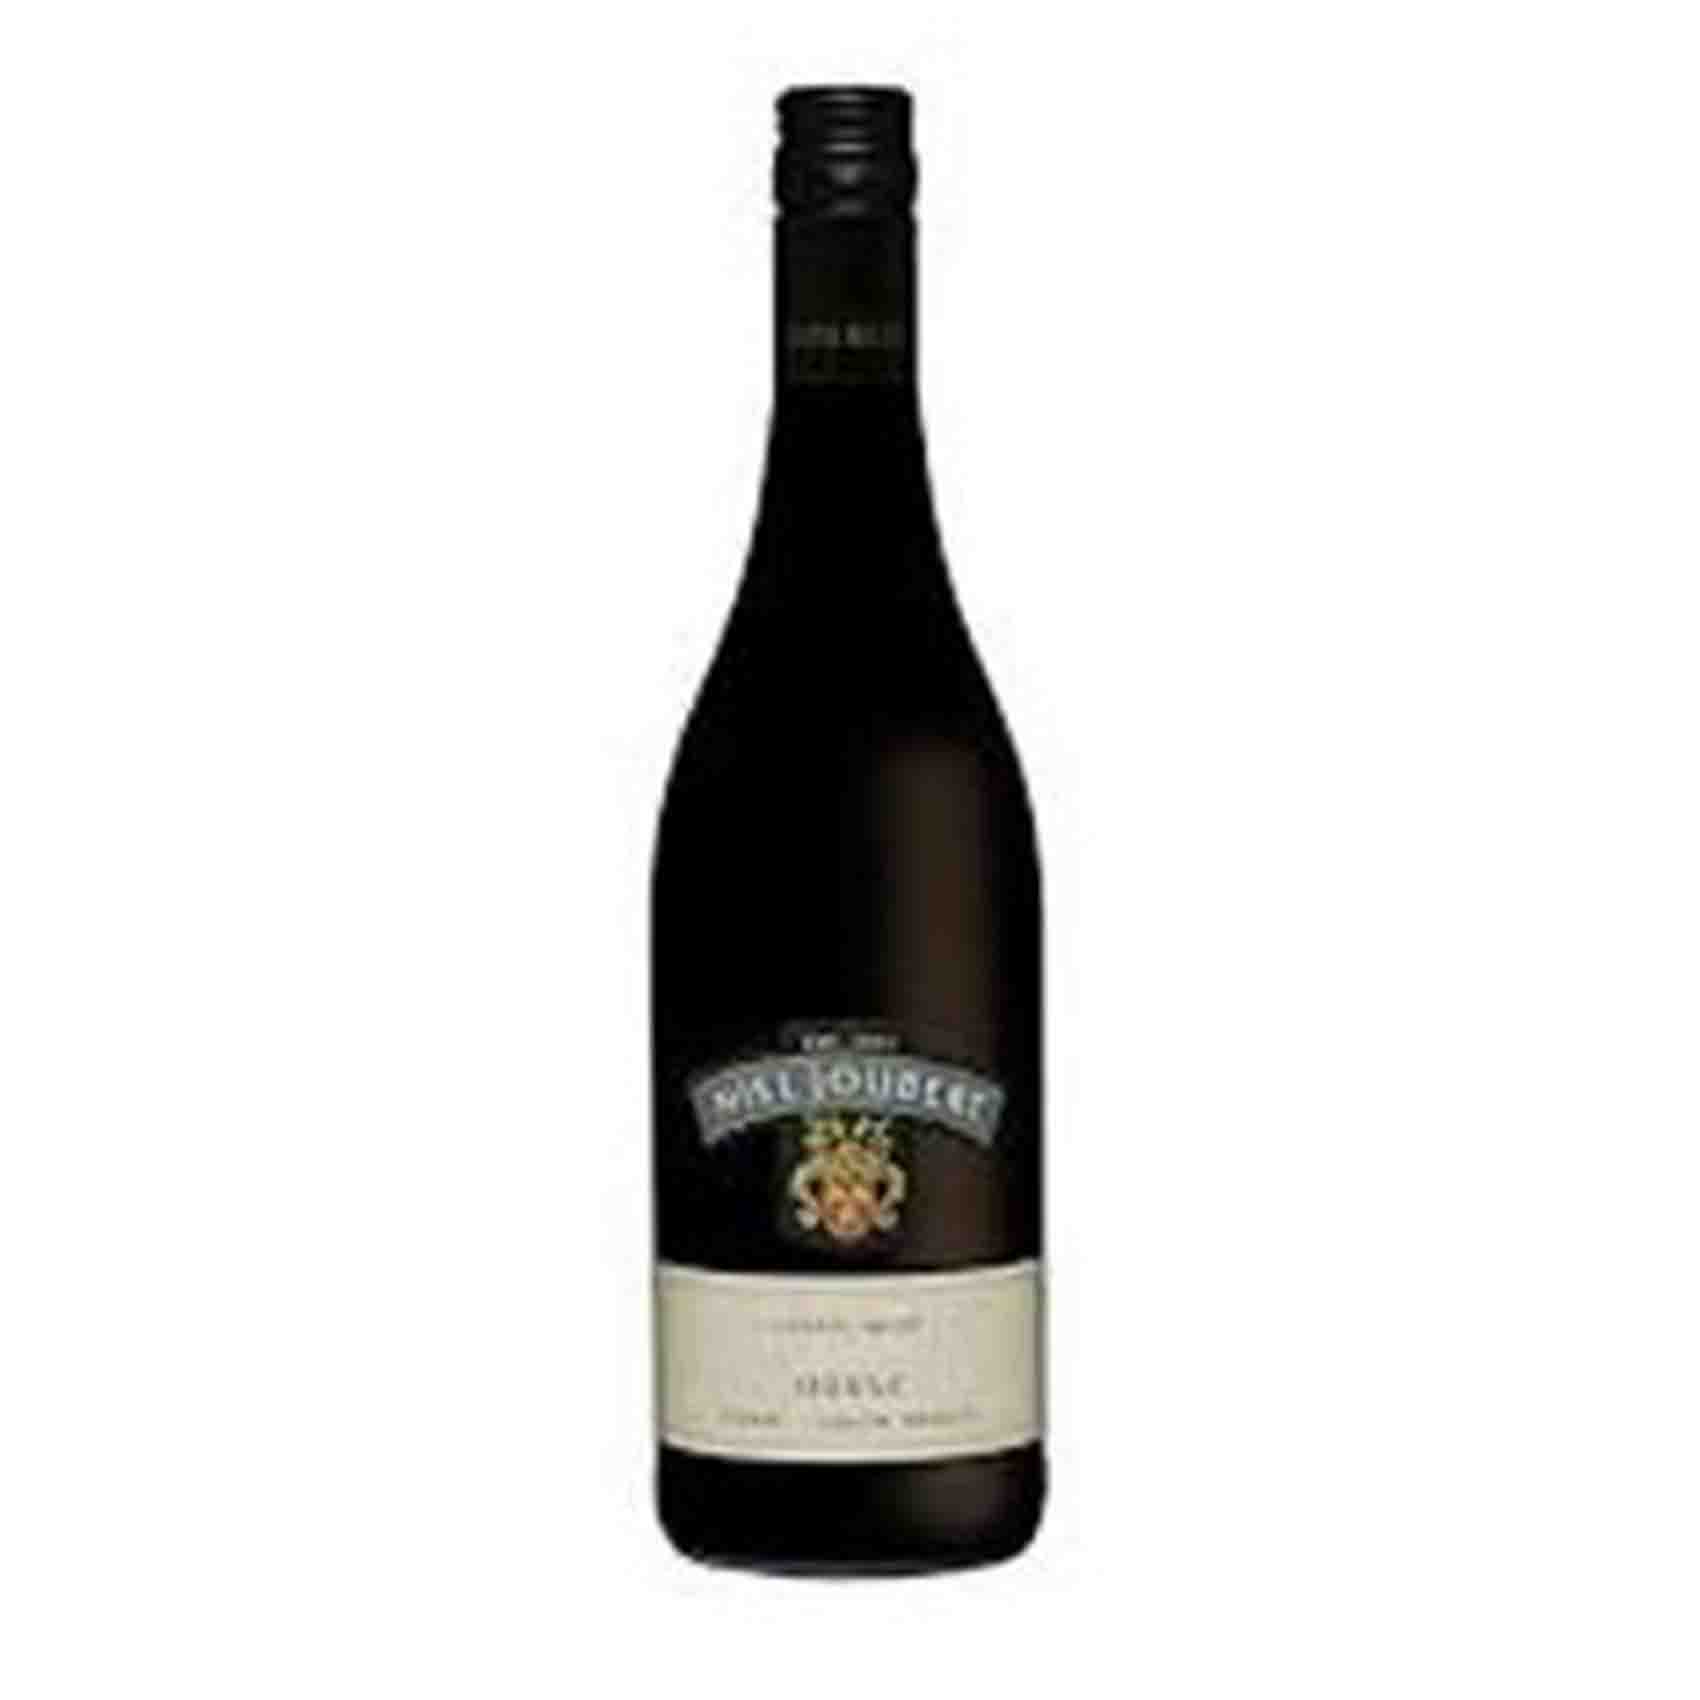 Niel Joubert Patrysbult Pinotage Red Wine 750Ml